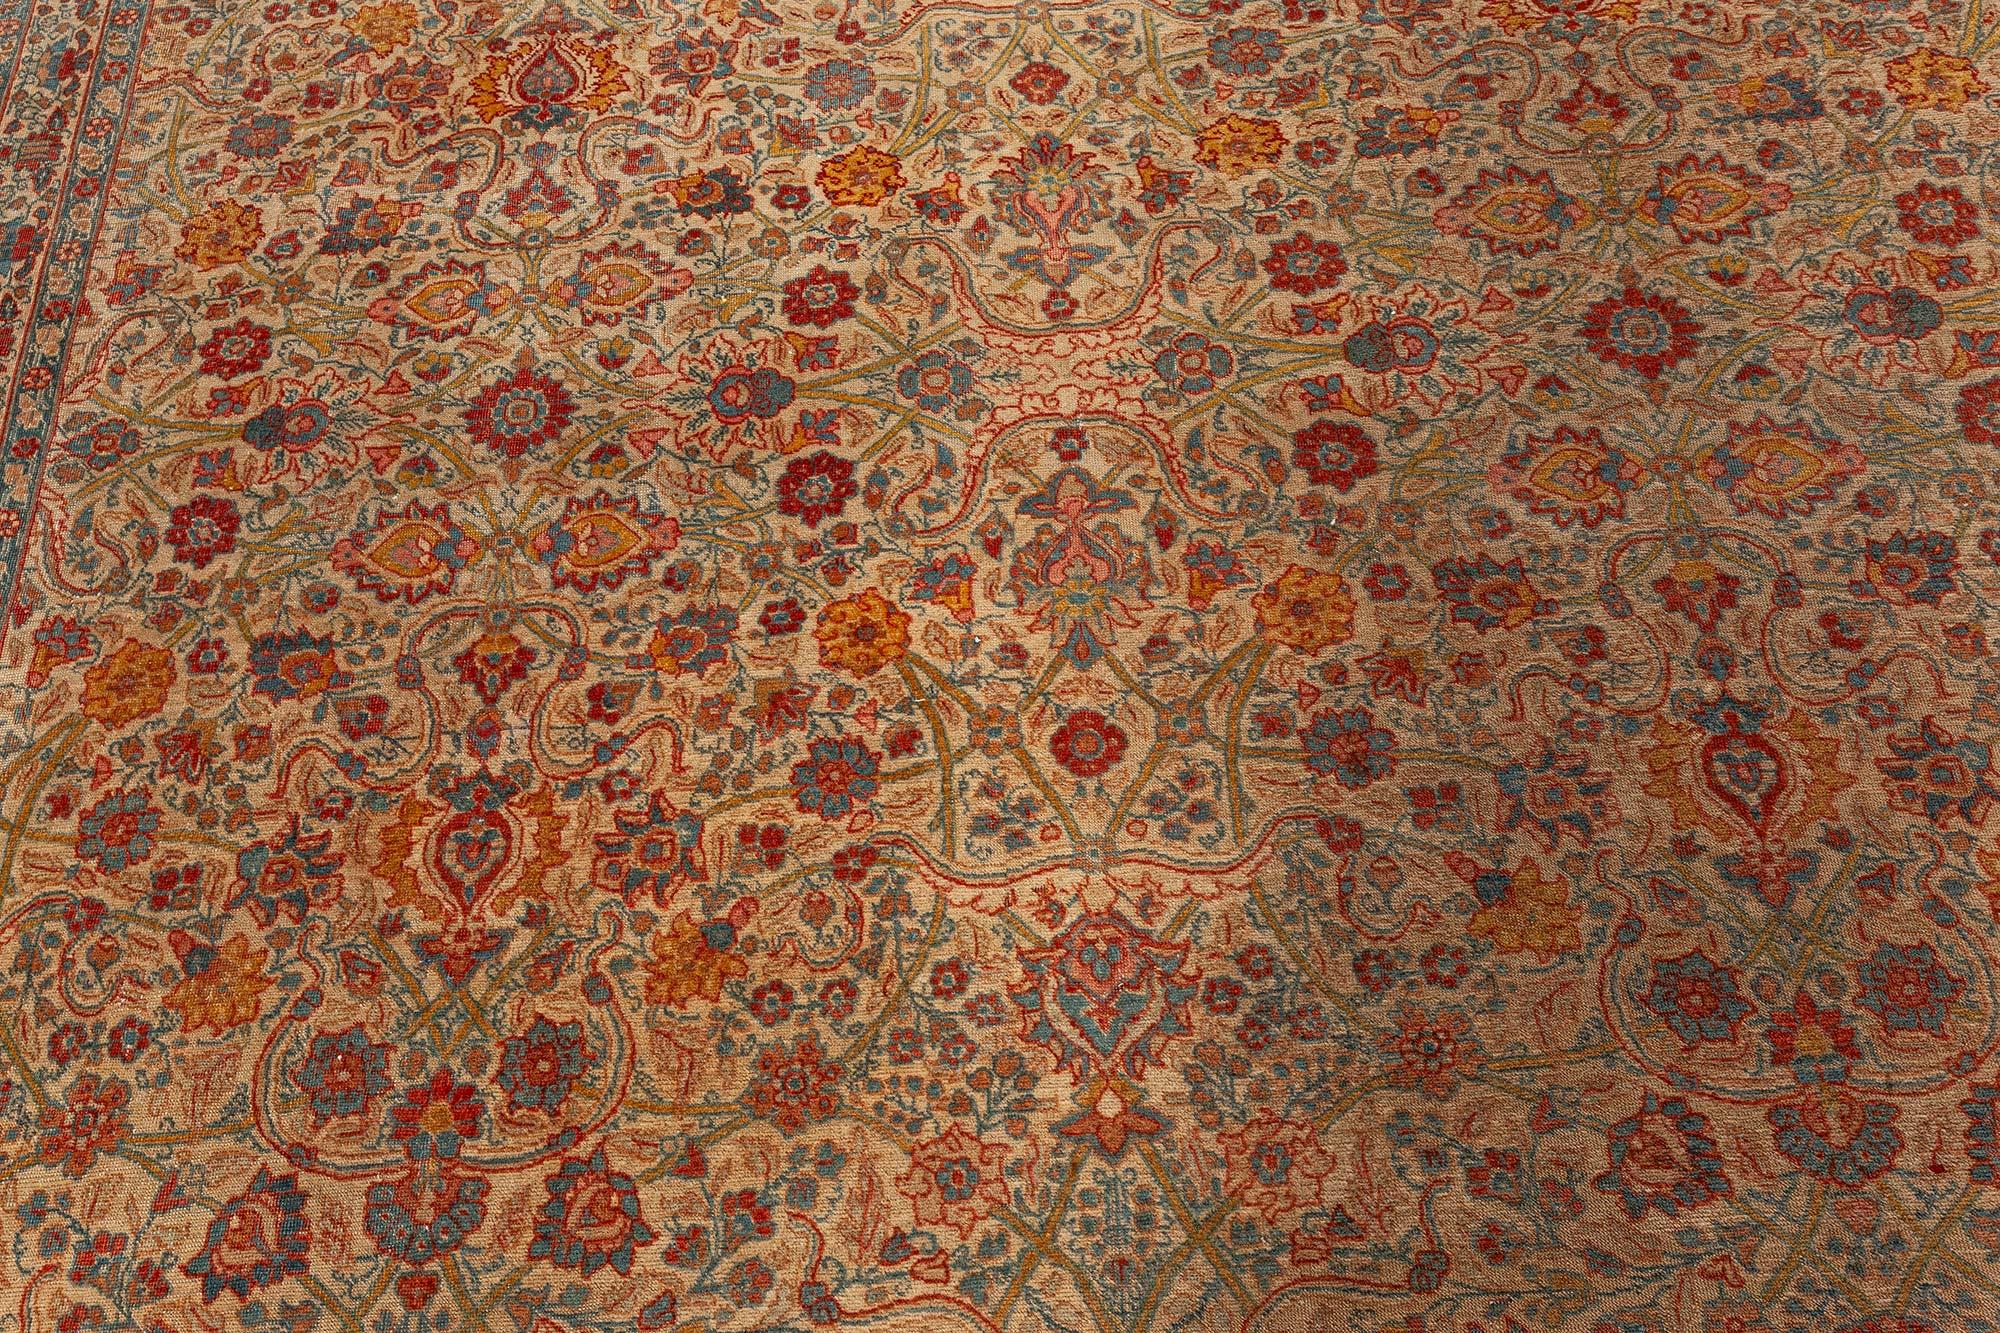 Antique Persian Tabriz Rug
Size: 8'3